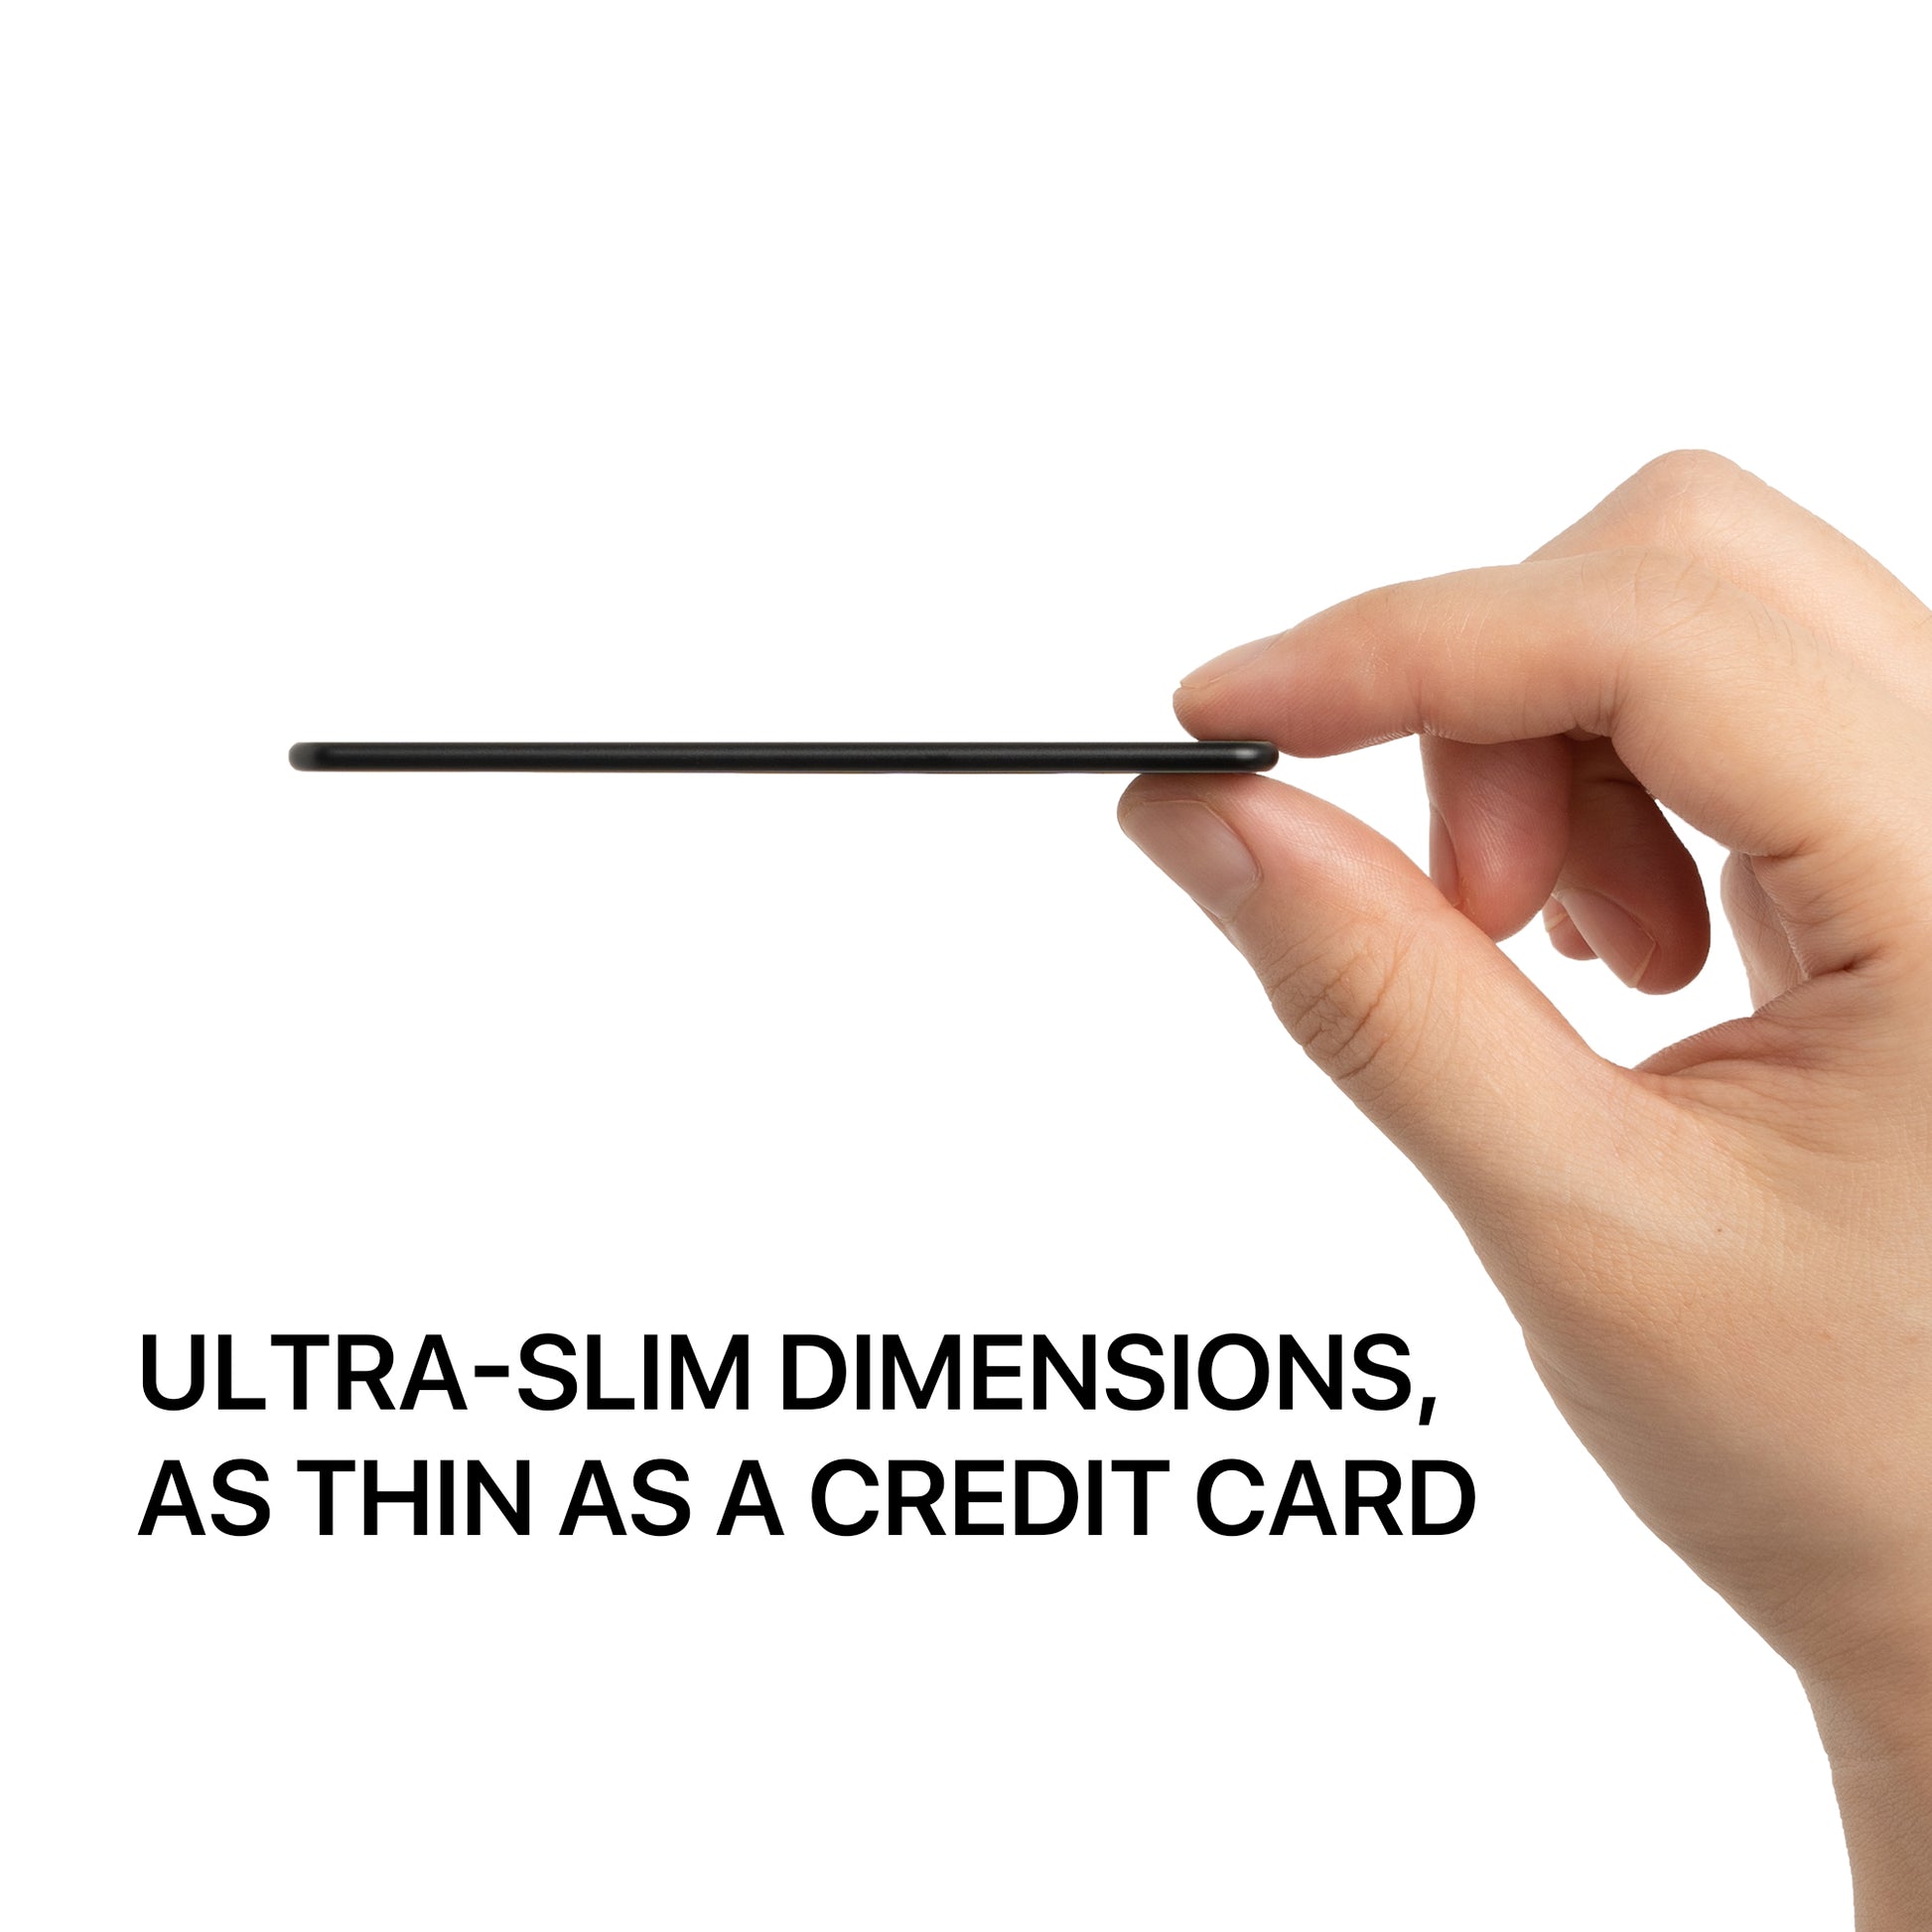 iFynd MiLi -MiCard Wallet Anti-Loss Card - ifyndyou